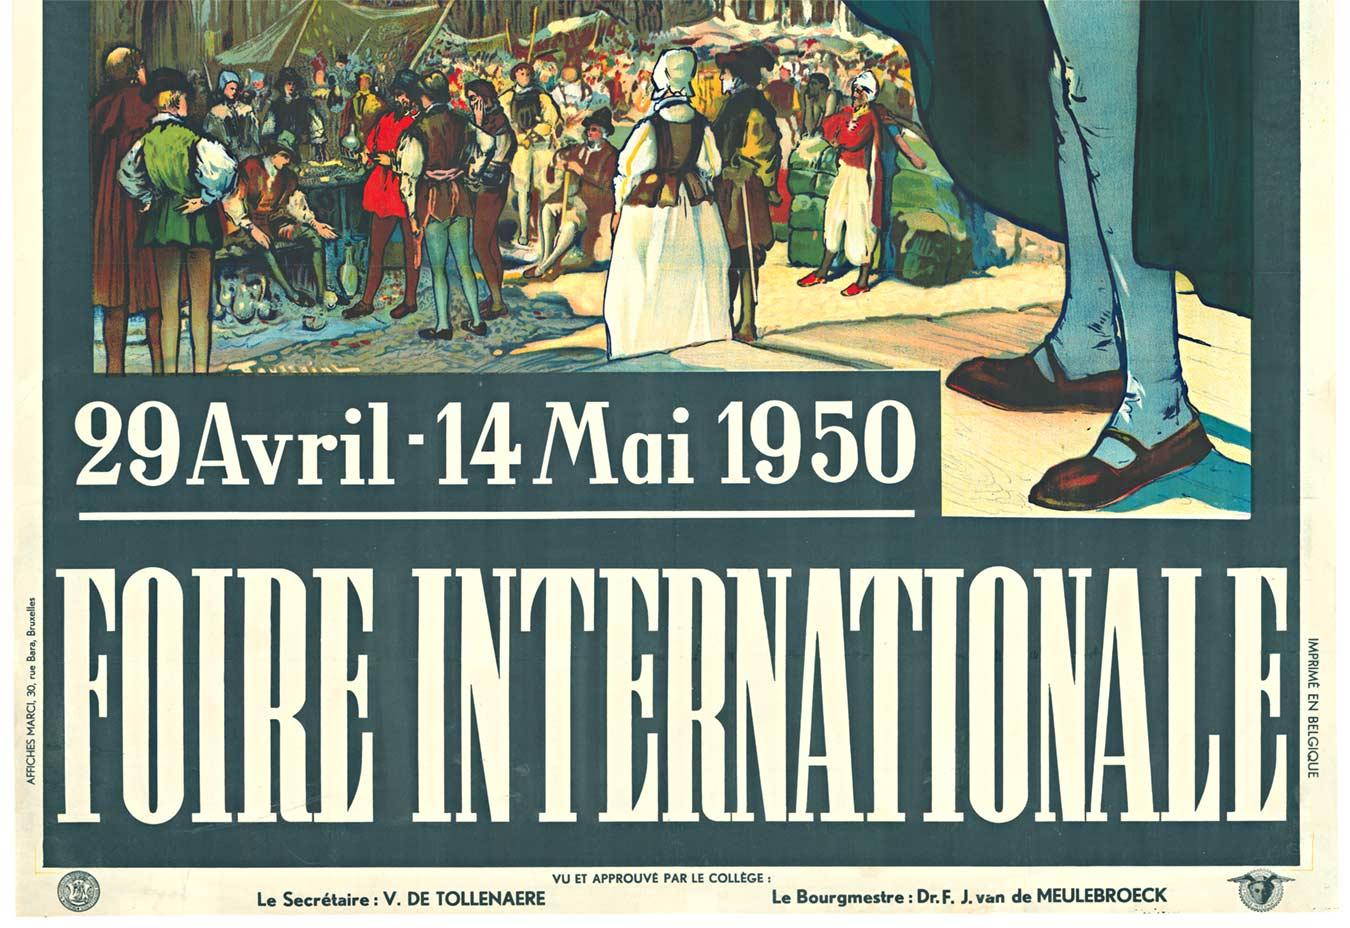 Original Bruxelles Foire Internationale vintage travel poster - American Impressionist Print by Fernand Toussaint